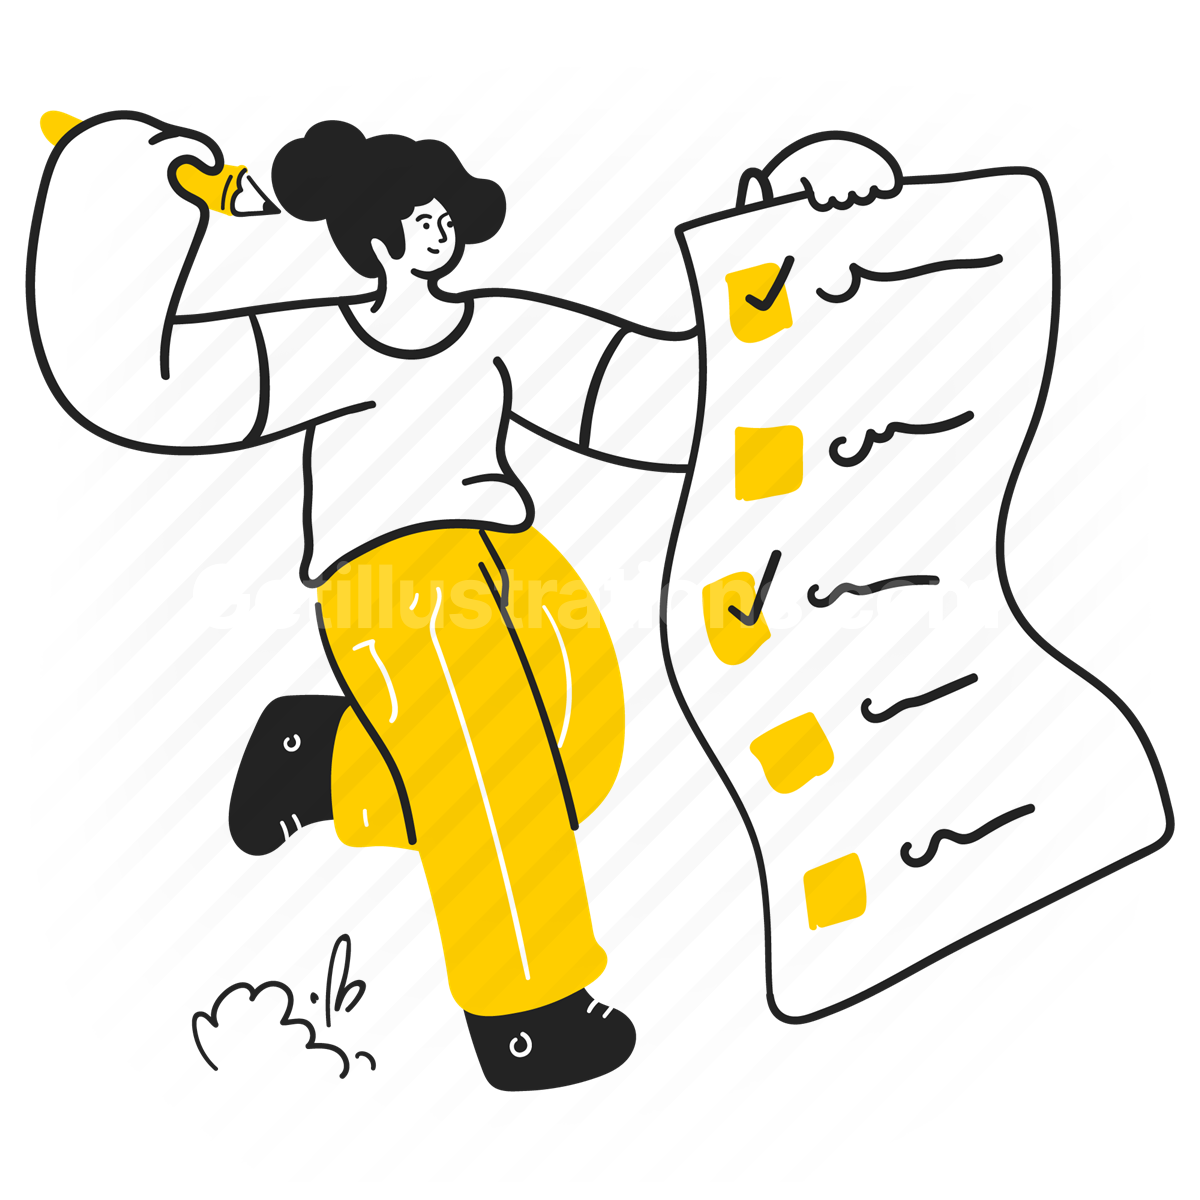 to do list, checklist, list, tasks, woman, chores, requirements